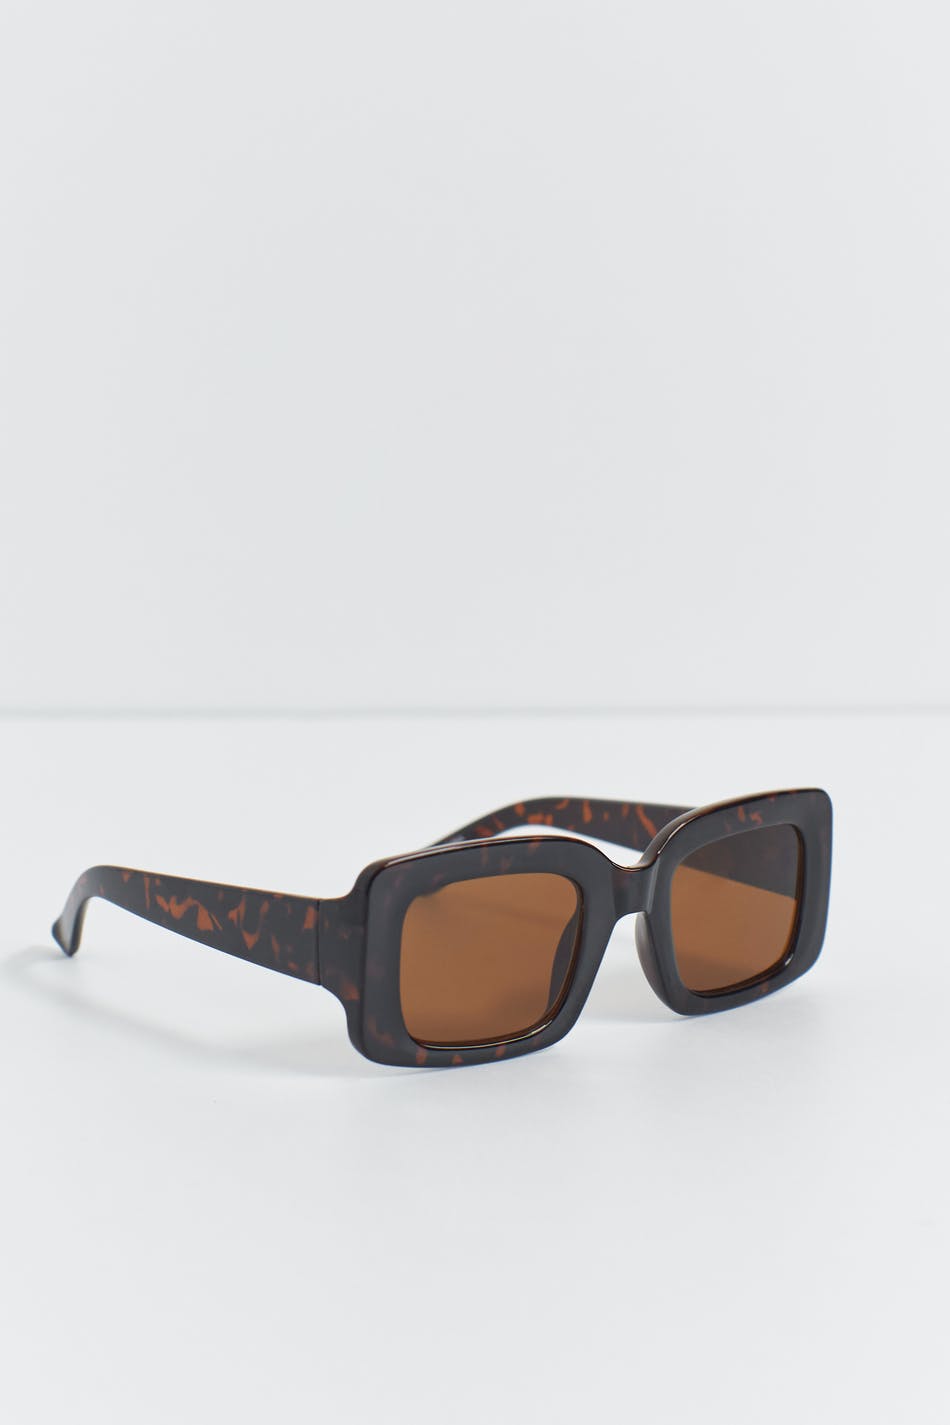 Buy Basik Eyewear - Extremely Dark X Large Oversized Flat Top Rectangular  UV400 Sunglasses (Matte Black, 5.7 in. (146 mm)) at